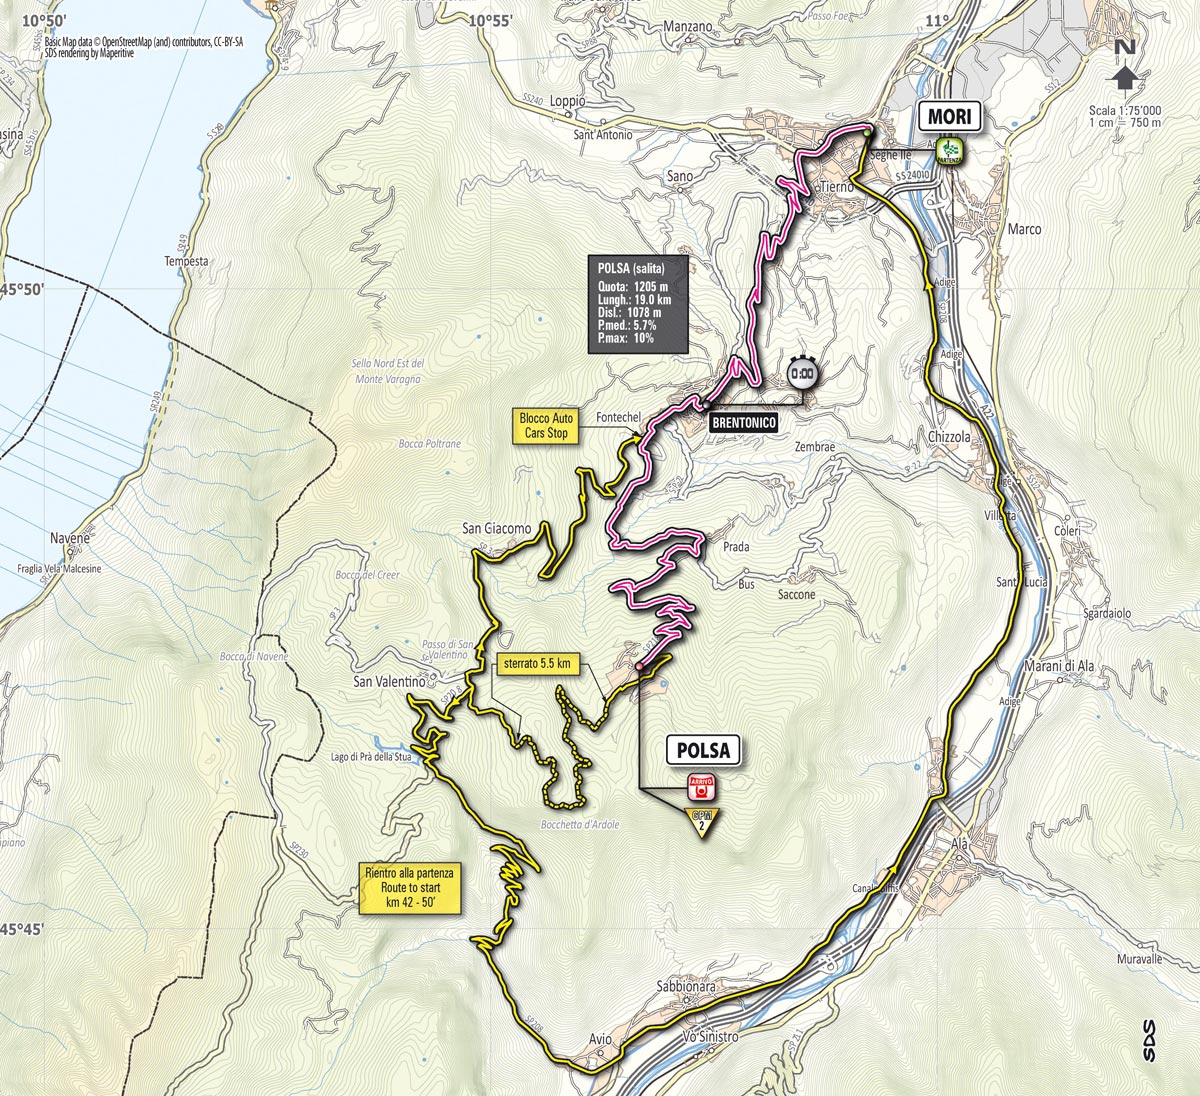 Giro d'Italia 2013 stage 18 map